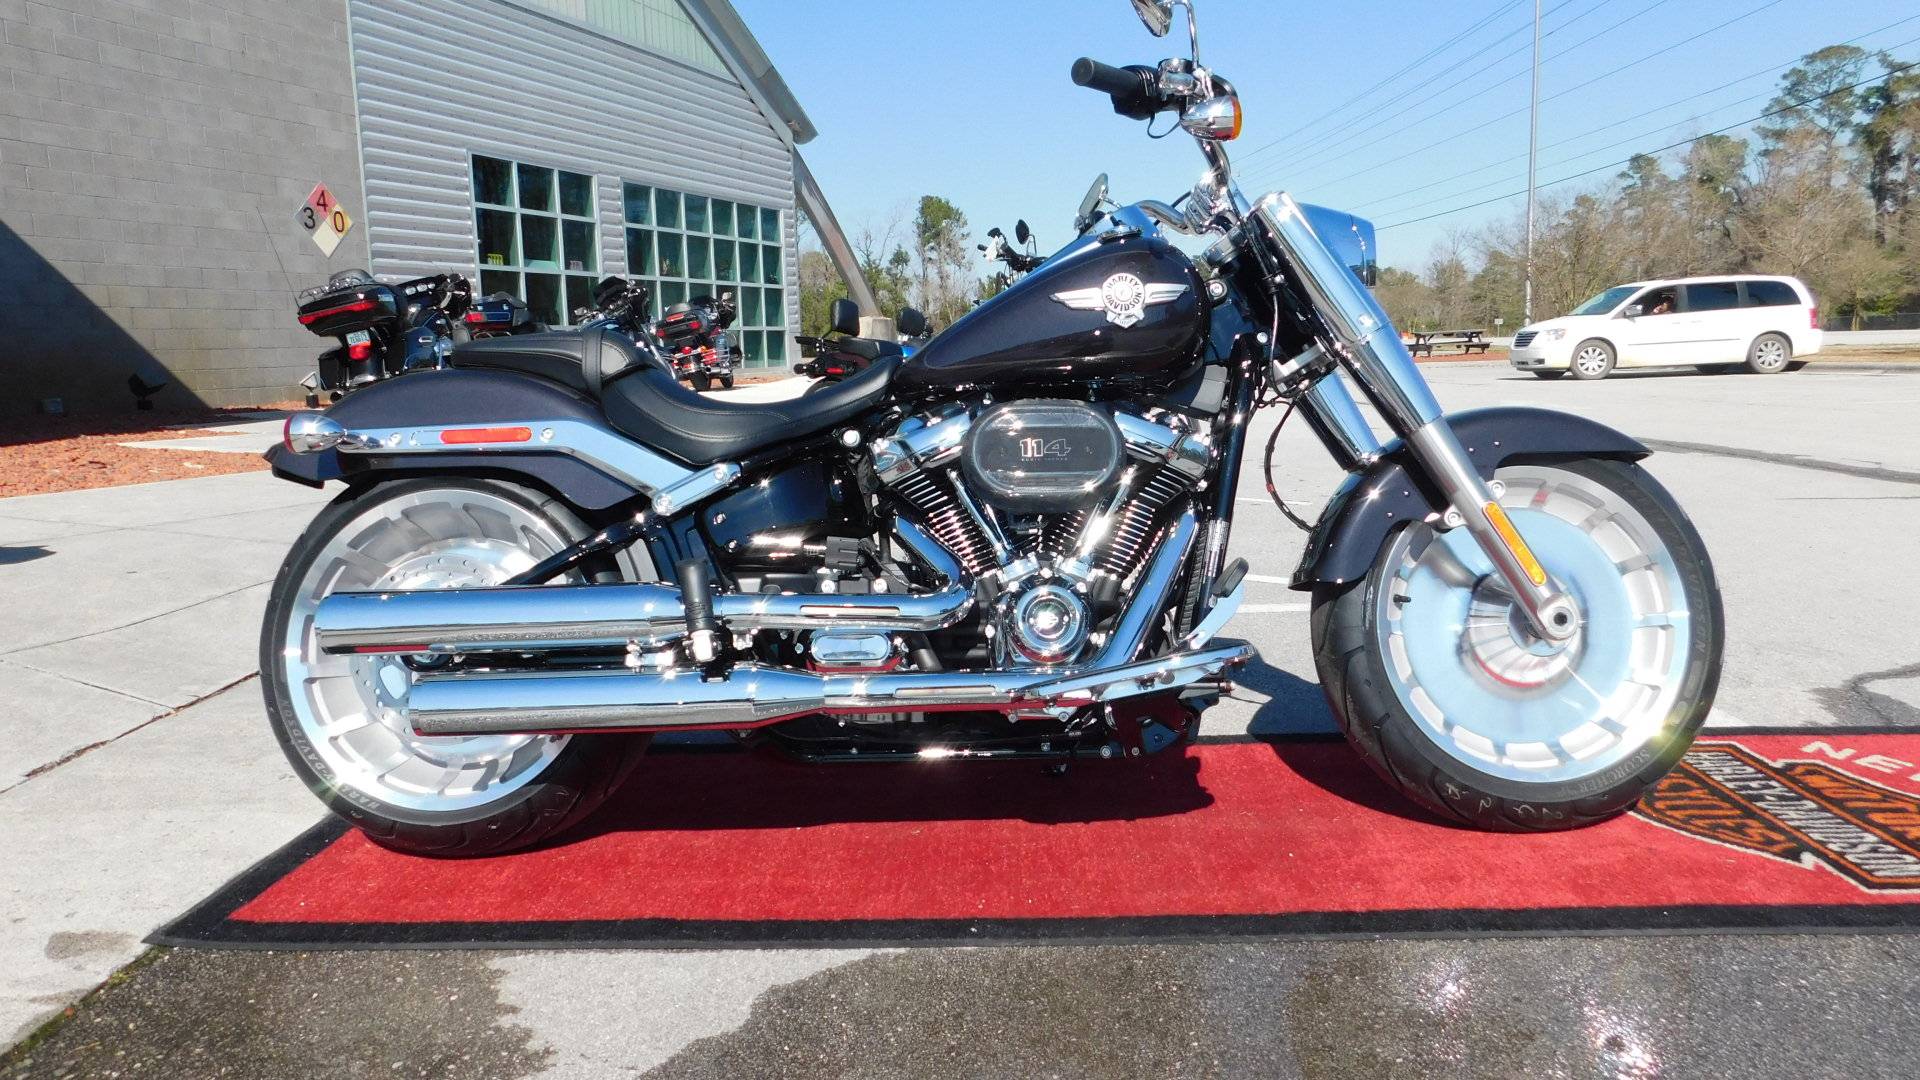 New 2021 Harley Davidson Fat Boy 114 Motorcycles In Jacksonville Nc Nrhd0004